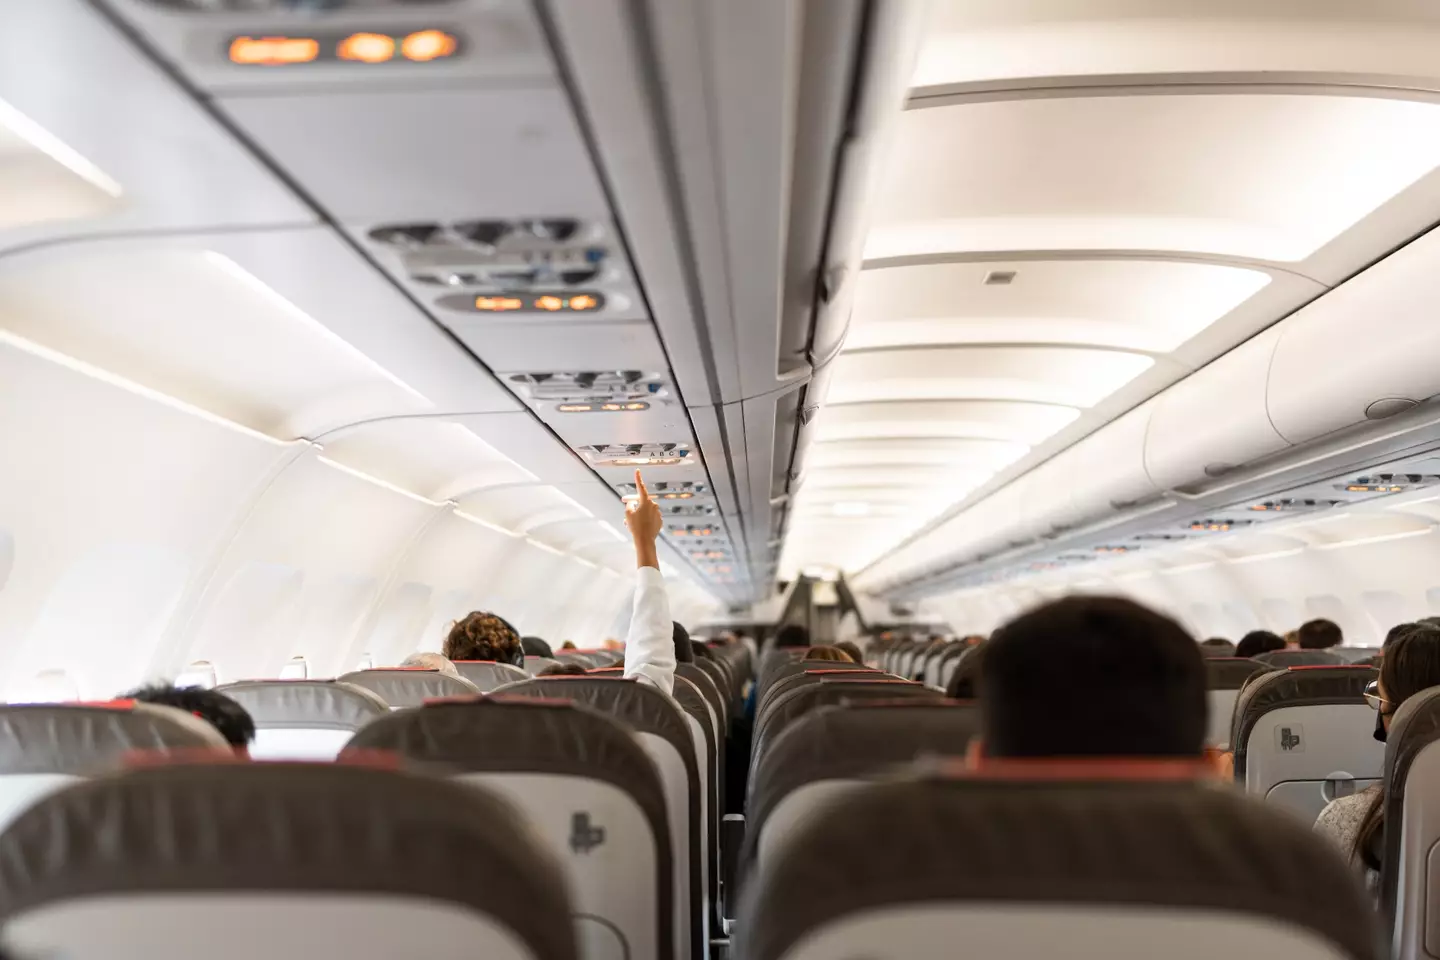 A flight attendant has shared how to avoid jet lag on long-haul flights.